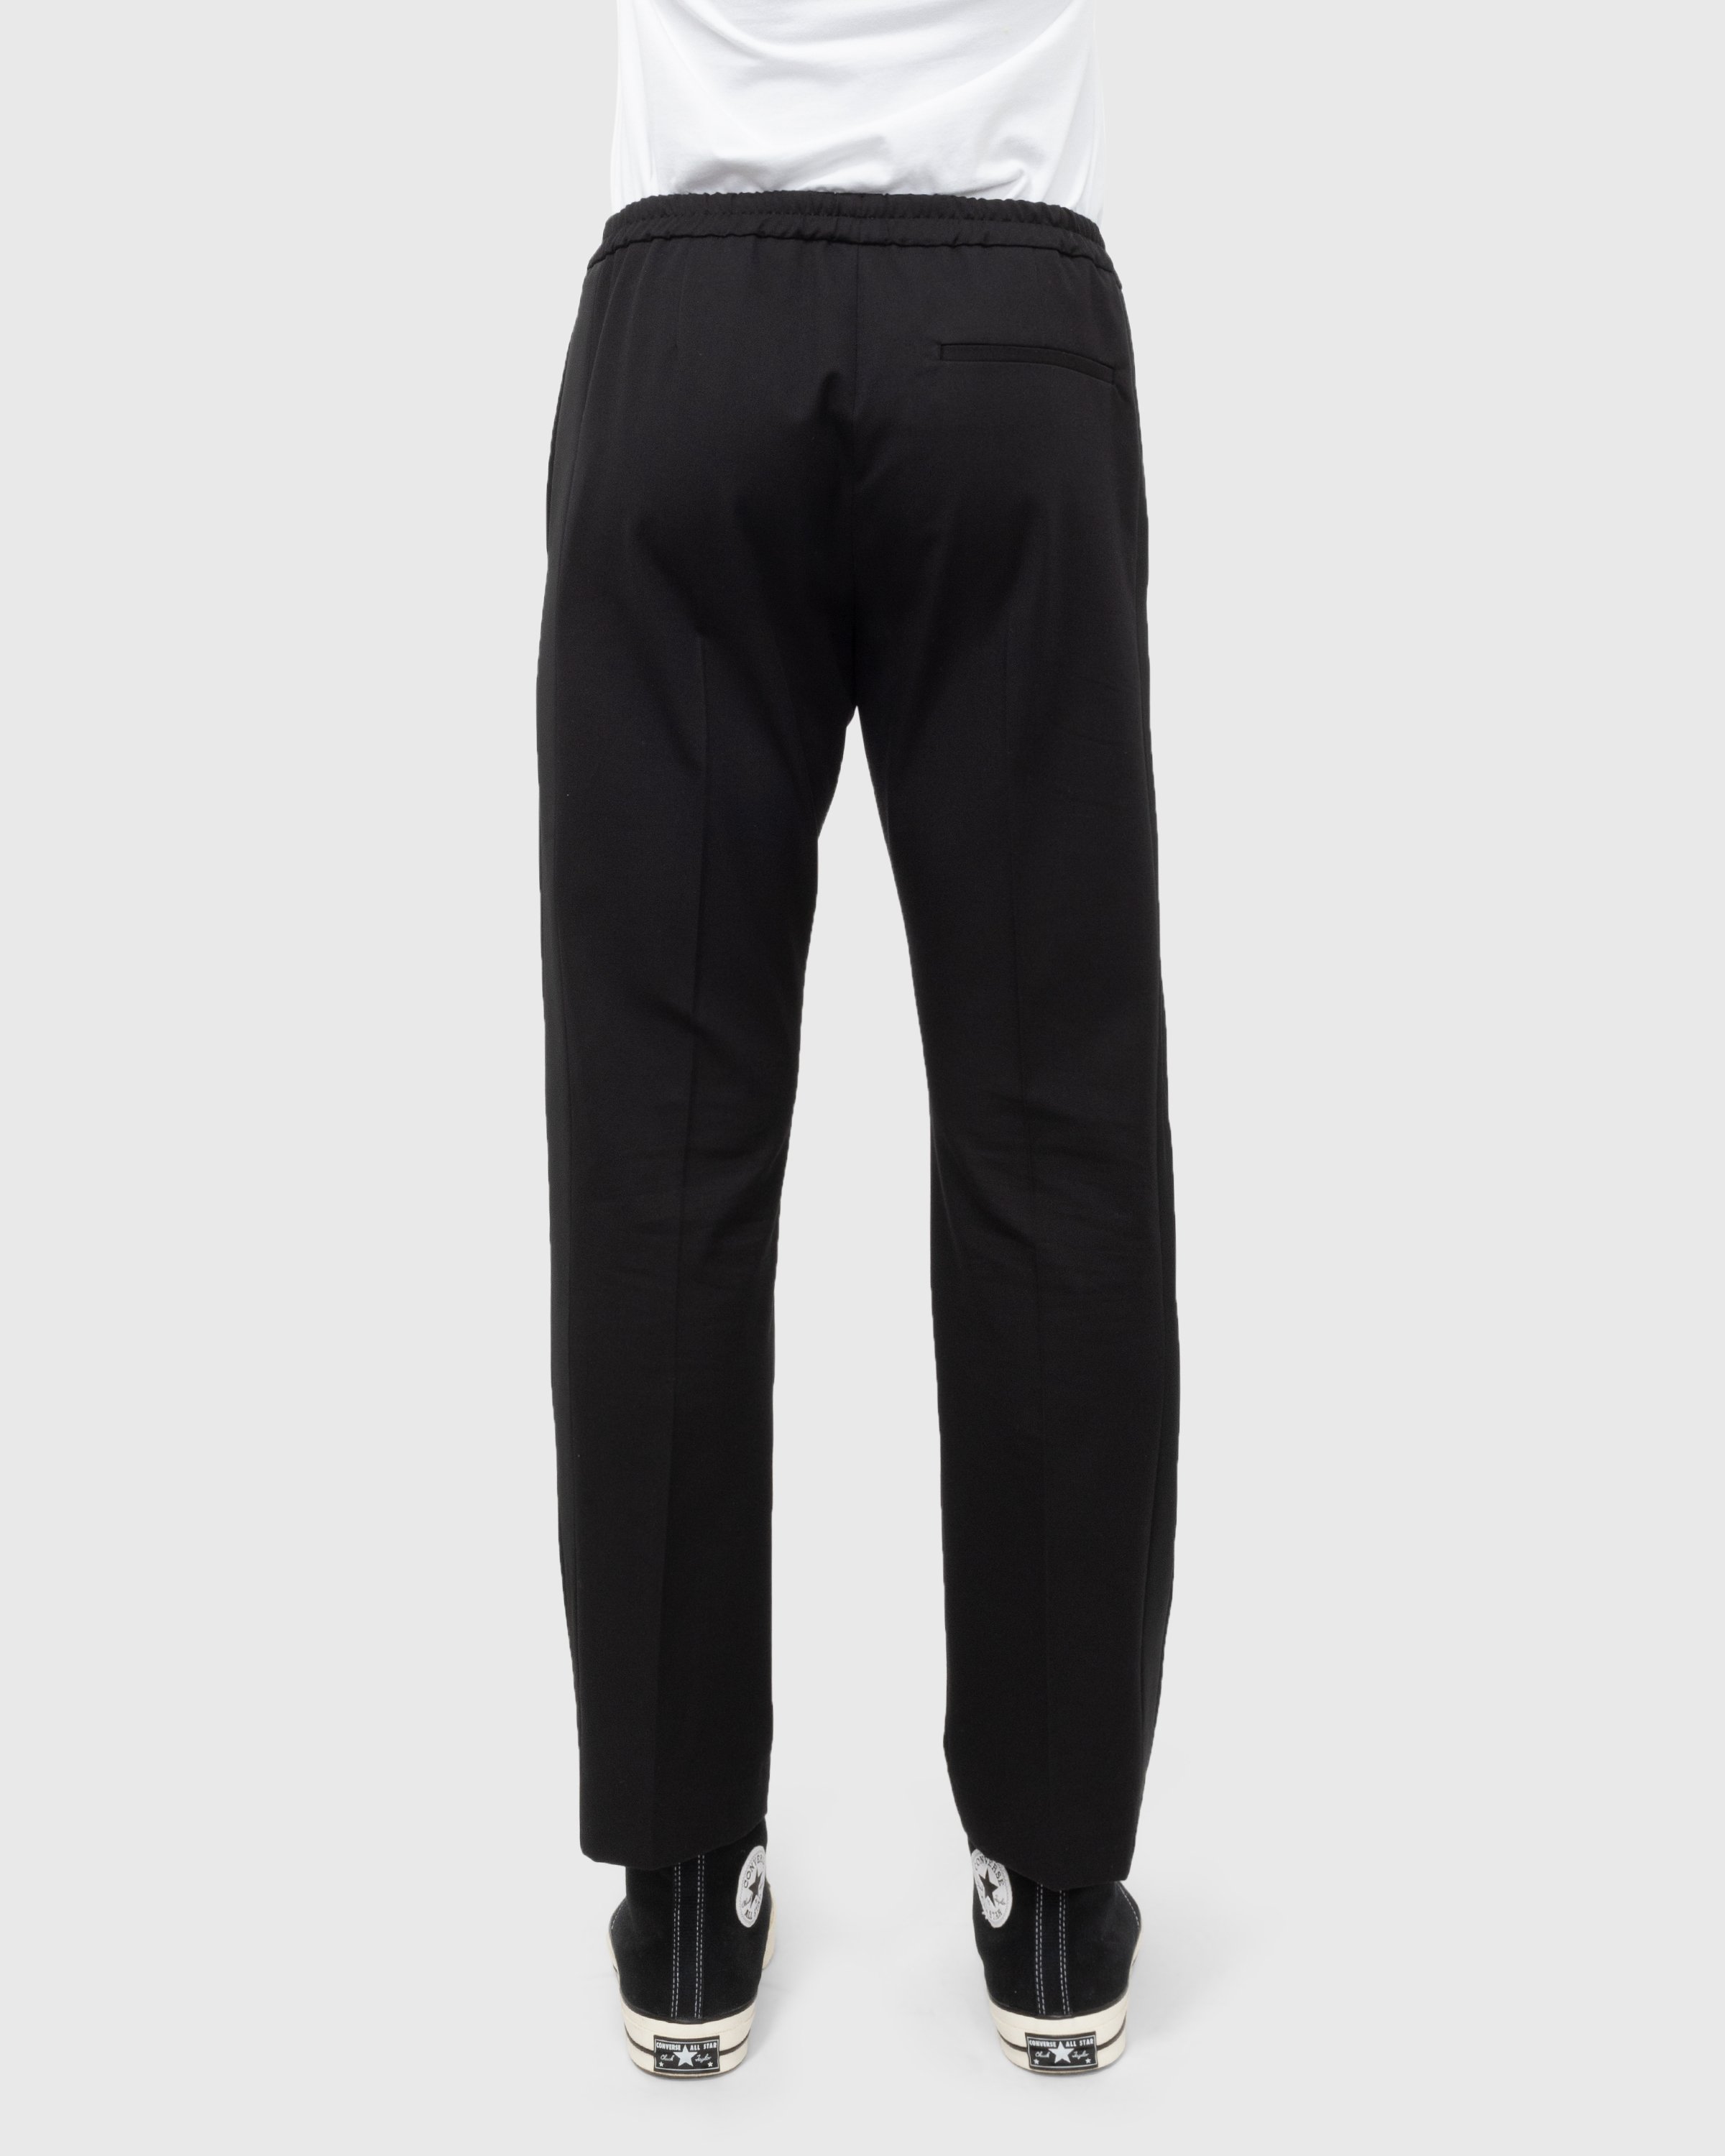 Dries van Noten - Parkino Pants Black - Clothing - Black - Image 2